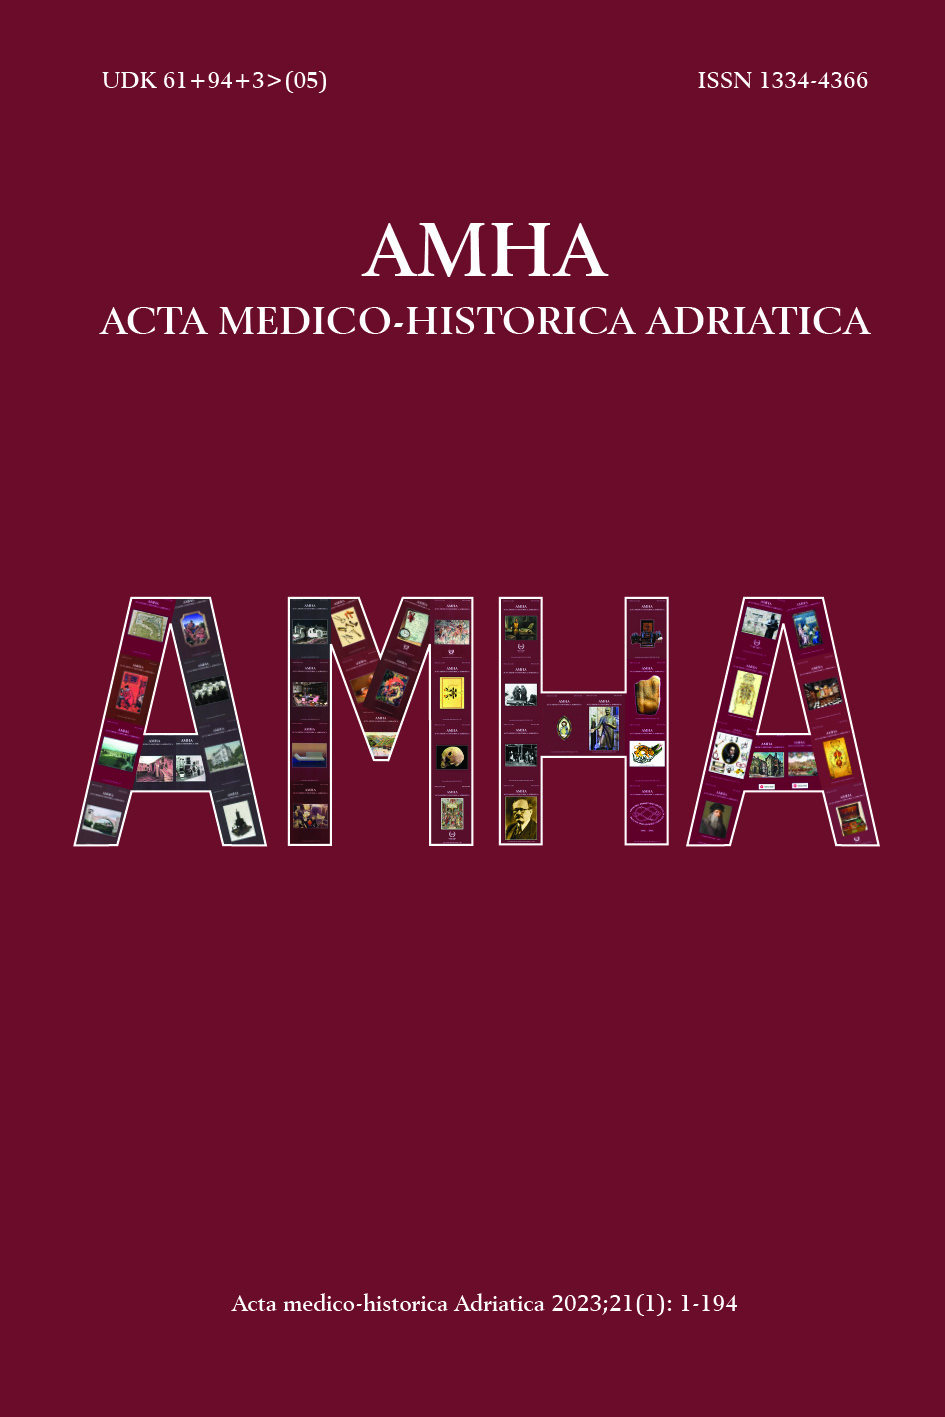 					View Vol. 21 No. 1 (2023): AMHA – Acta medico-historica Adriatica
				